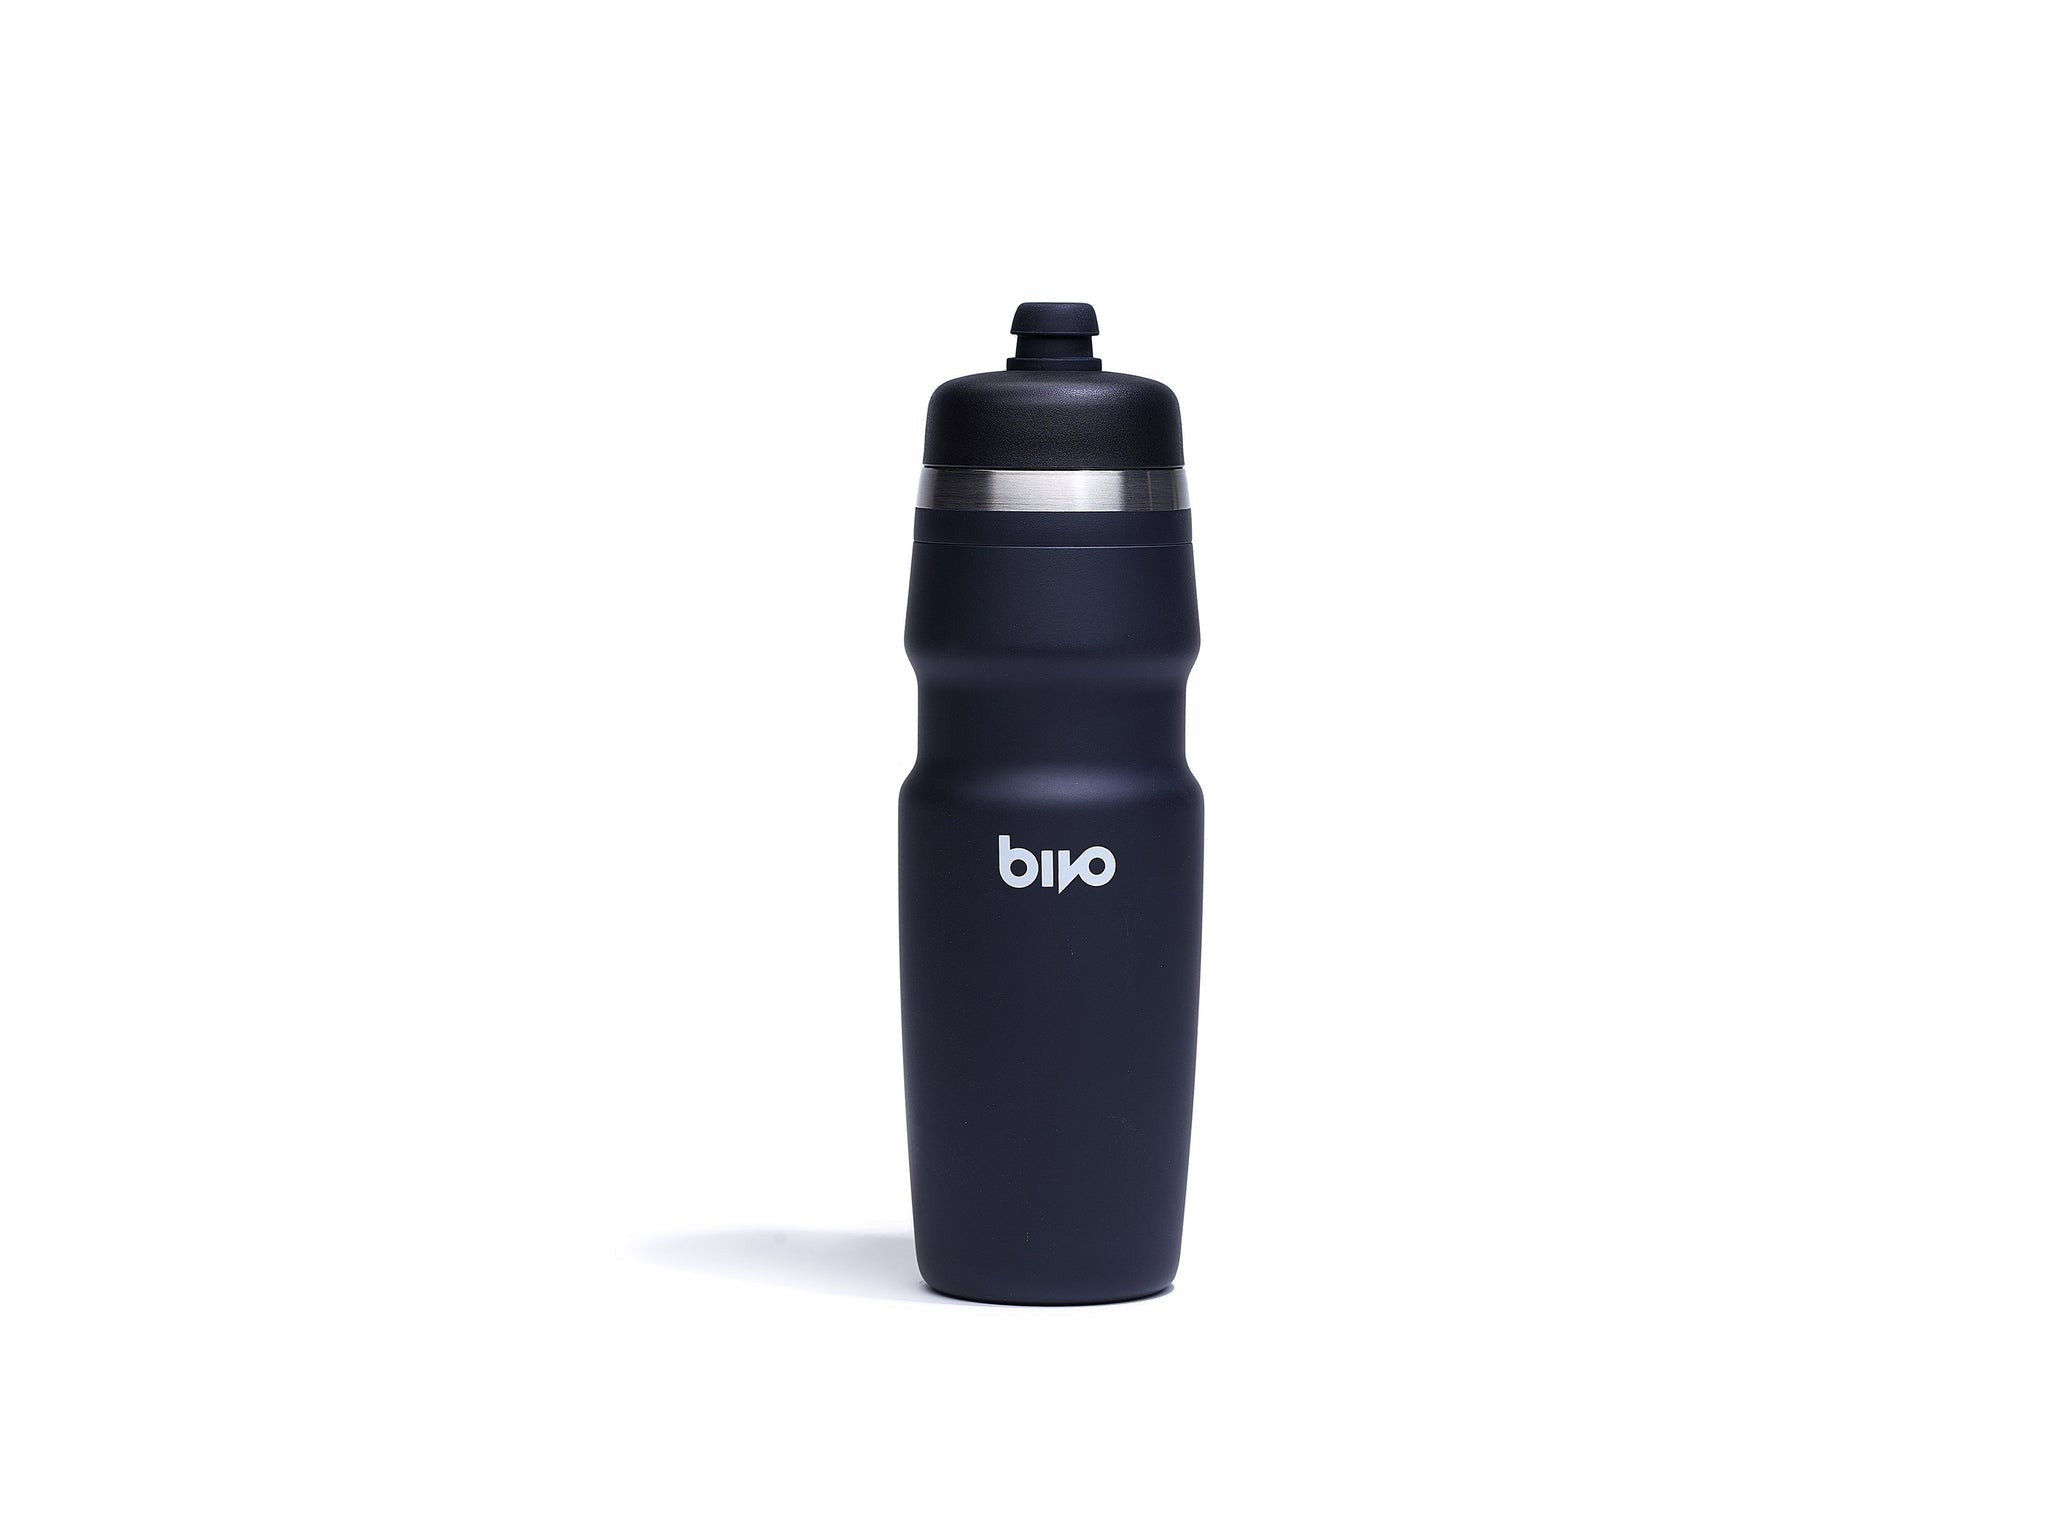 Bivo Duo 25 oz Water Bottle